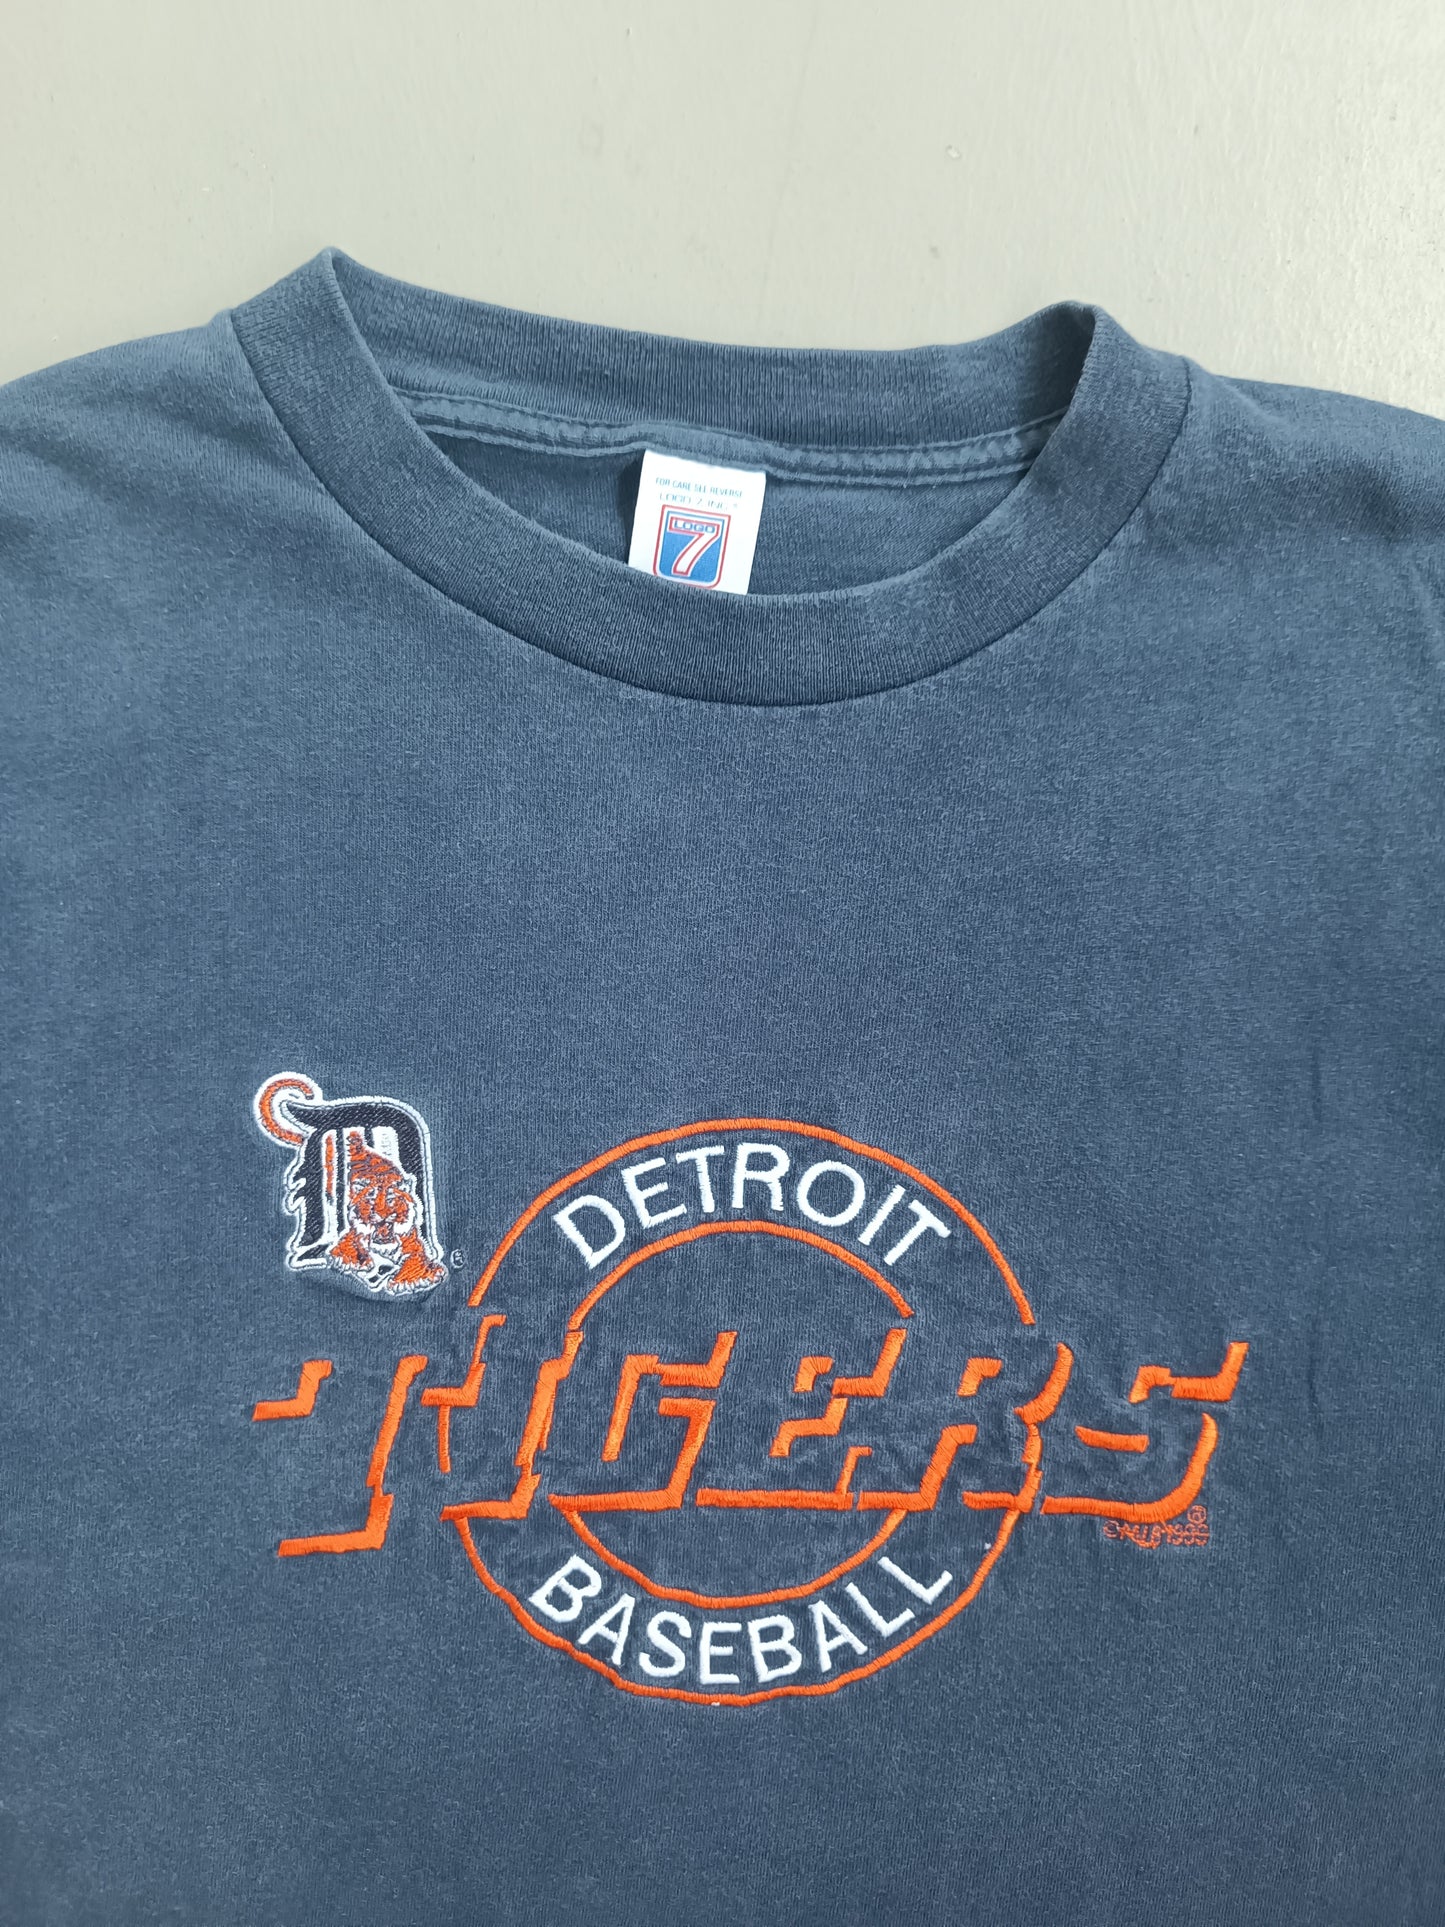 Detroit Tigers Baseball - L